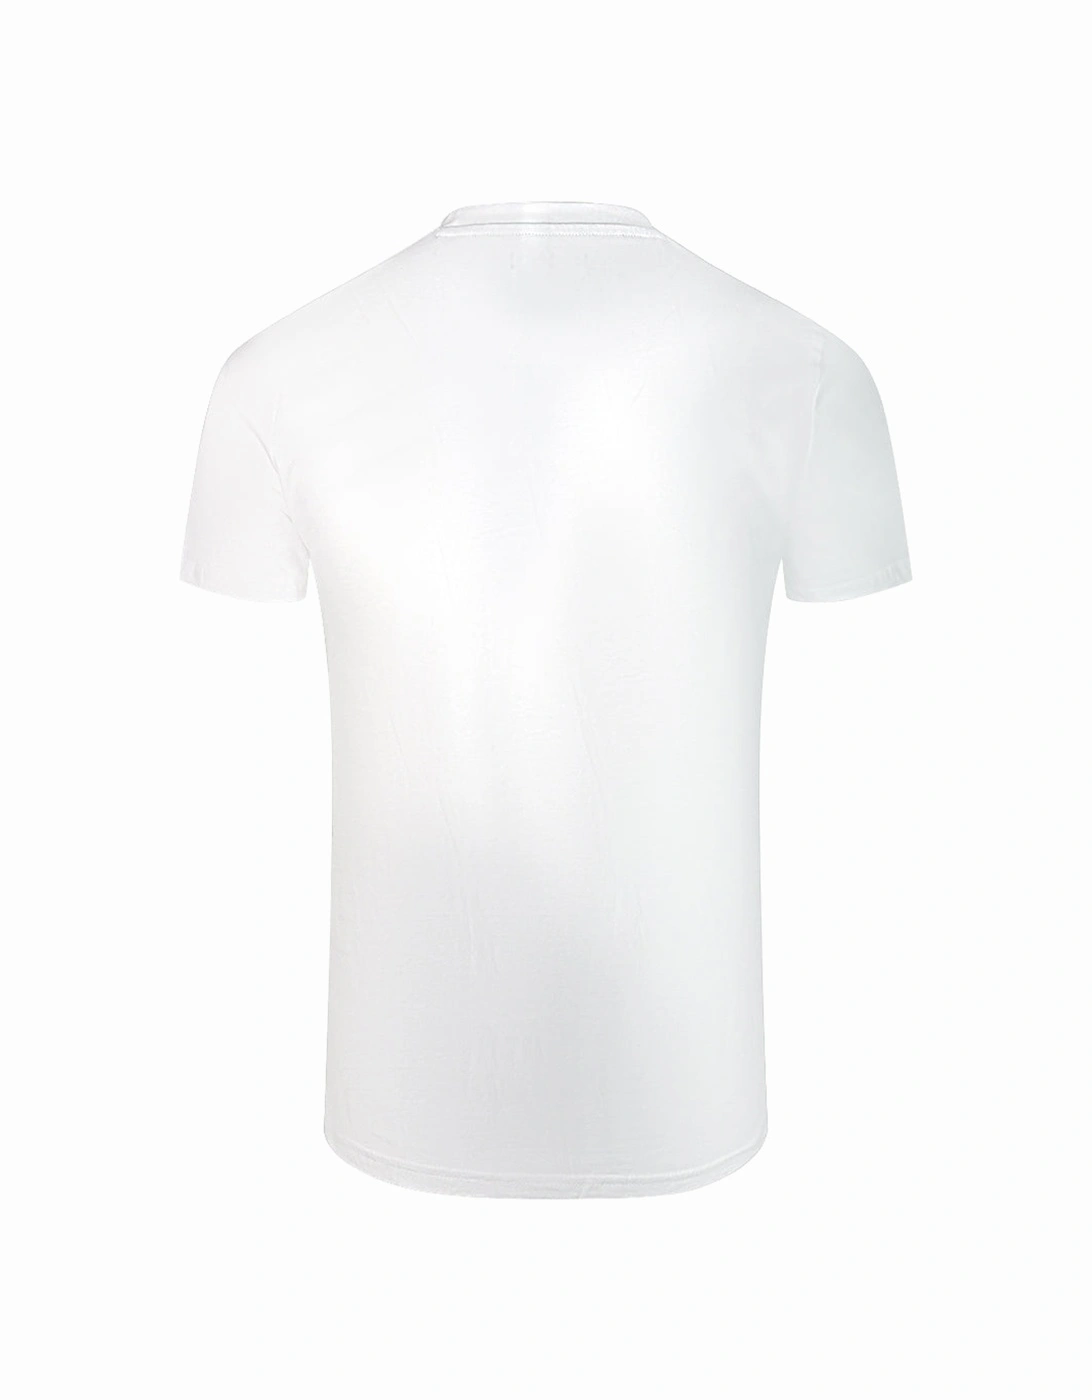 Cavalli Class Leopard Profile Design White T-Shirt